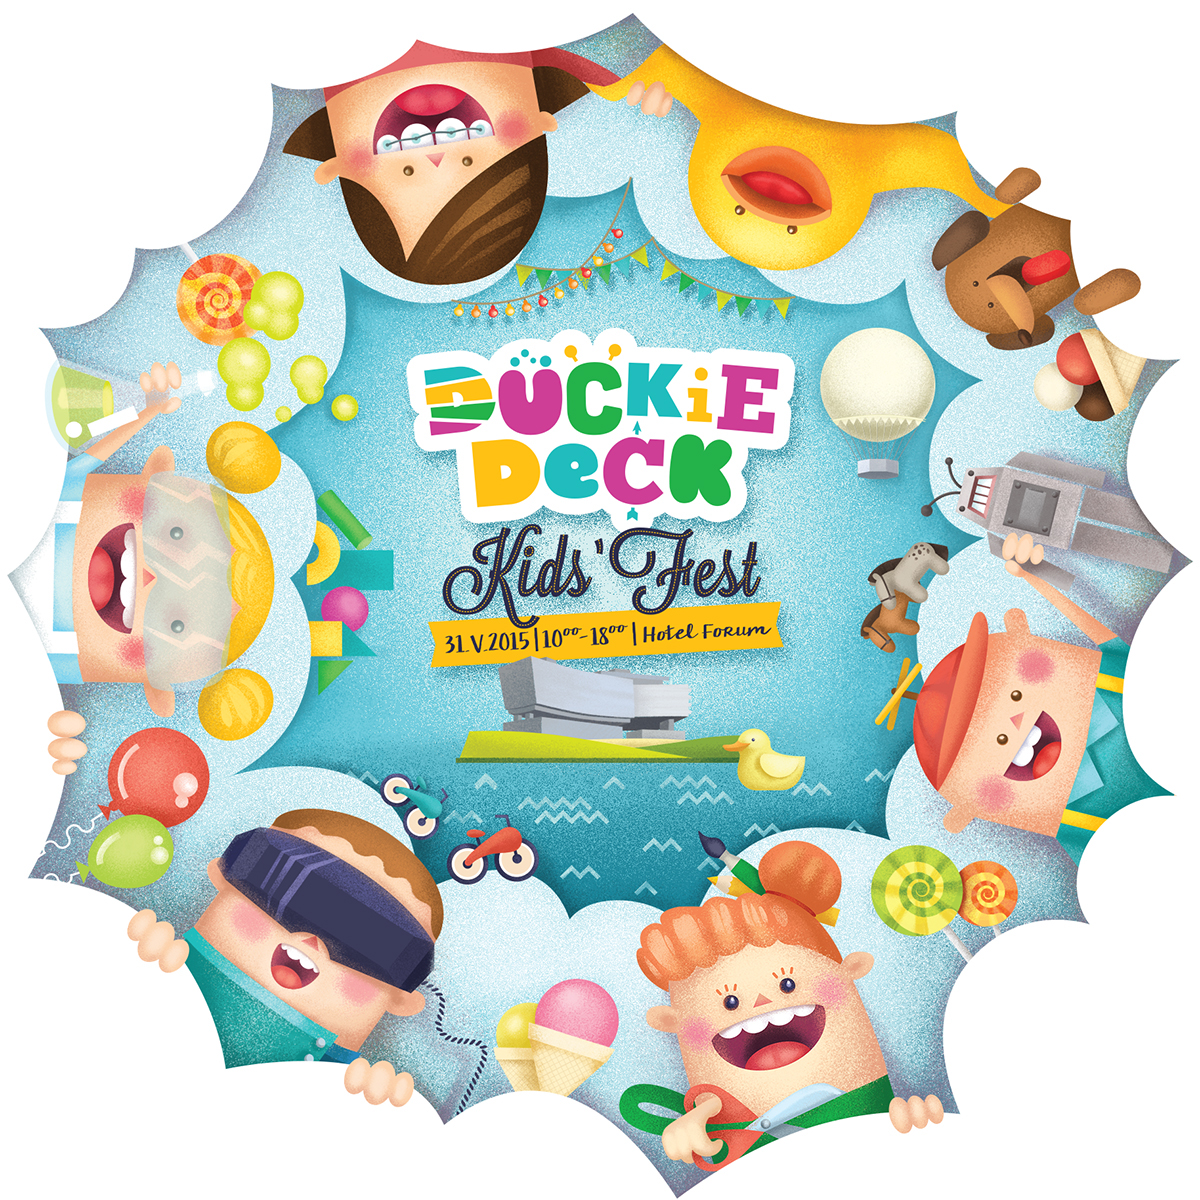 Duckie Deck Kids' Fest Children's Day duck poster t-shirt Badges Event festival kids landingpage cracow dog